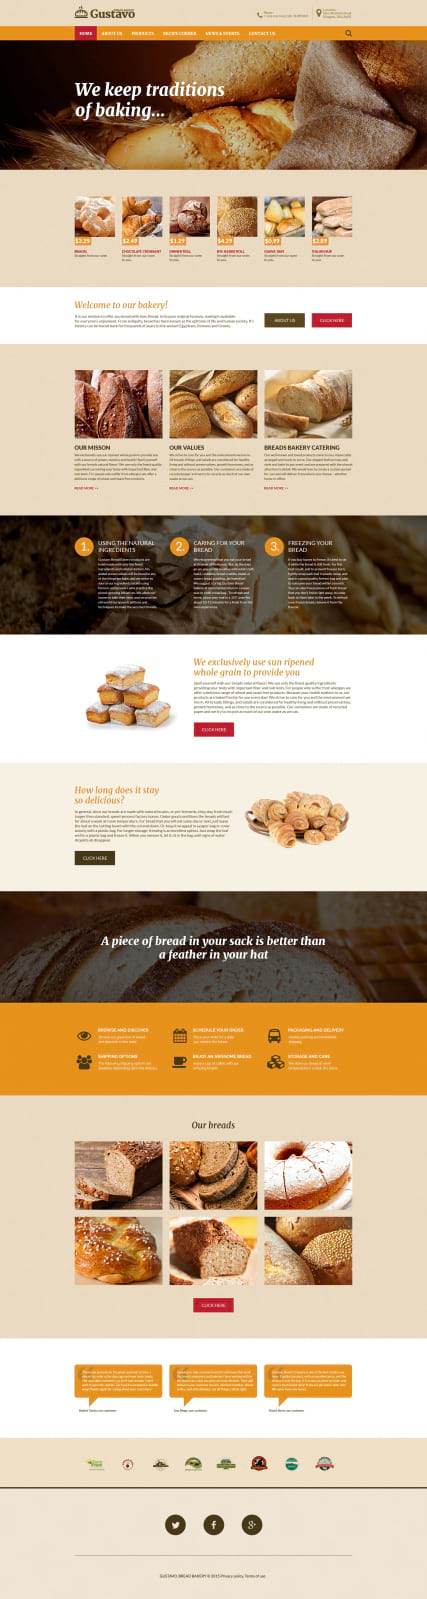 "Домашний хлеб" html шаблон сайта пекарни